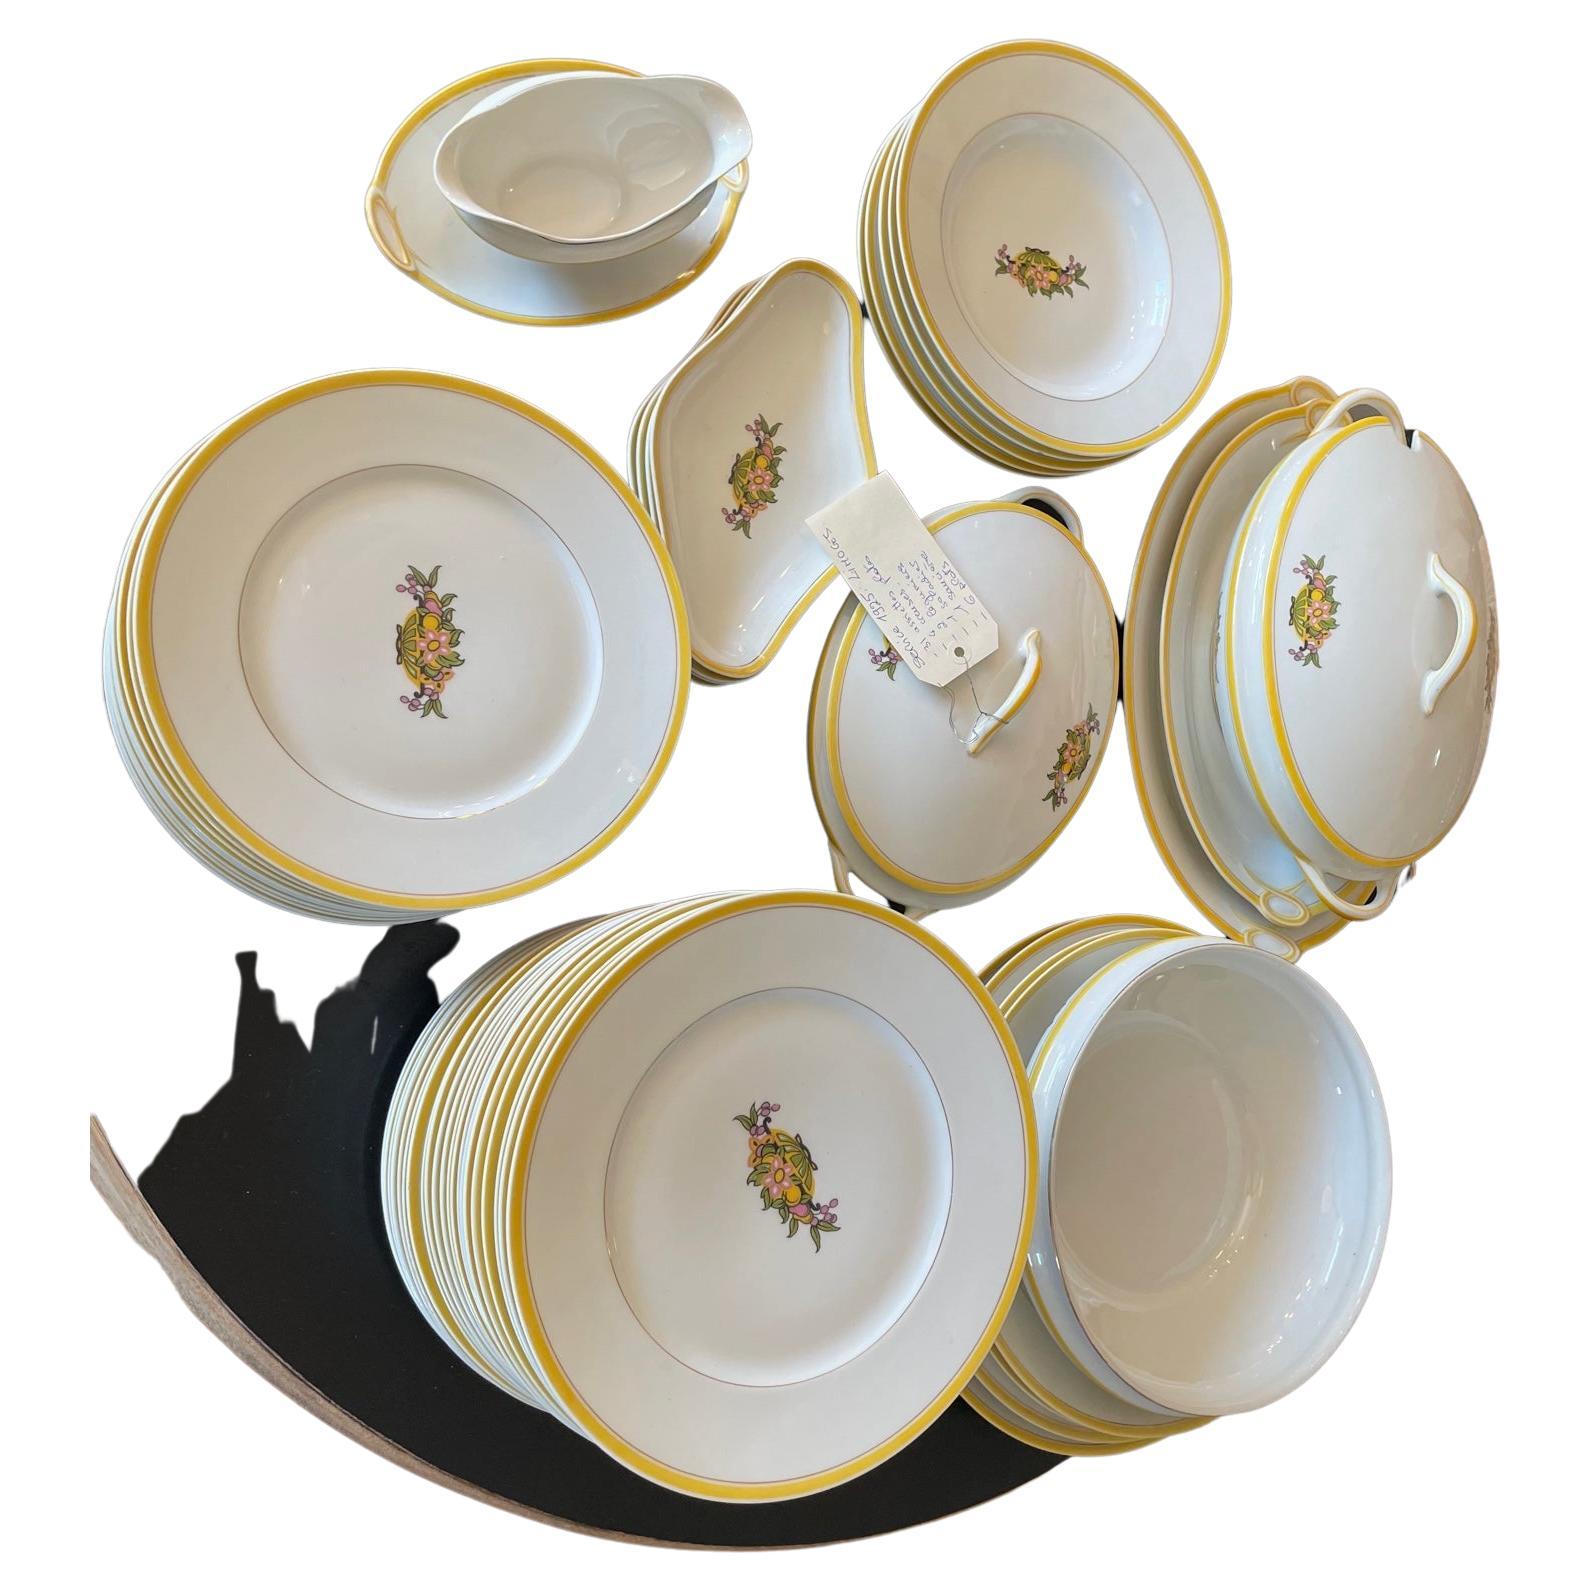 20th Century French Art Deco Limoges Porcelain Service Tableware 49 Pieces